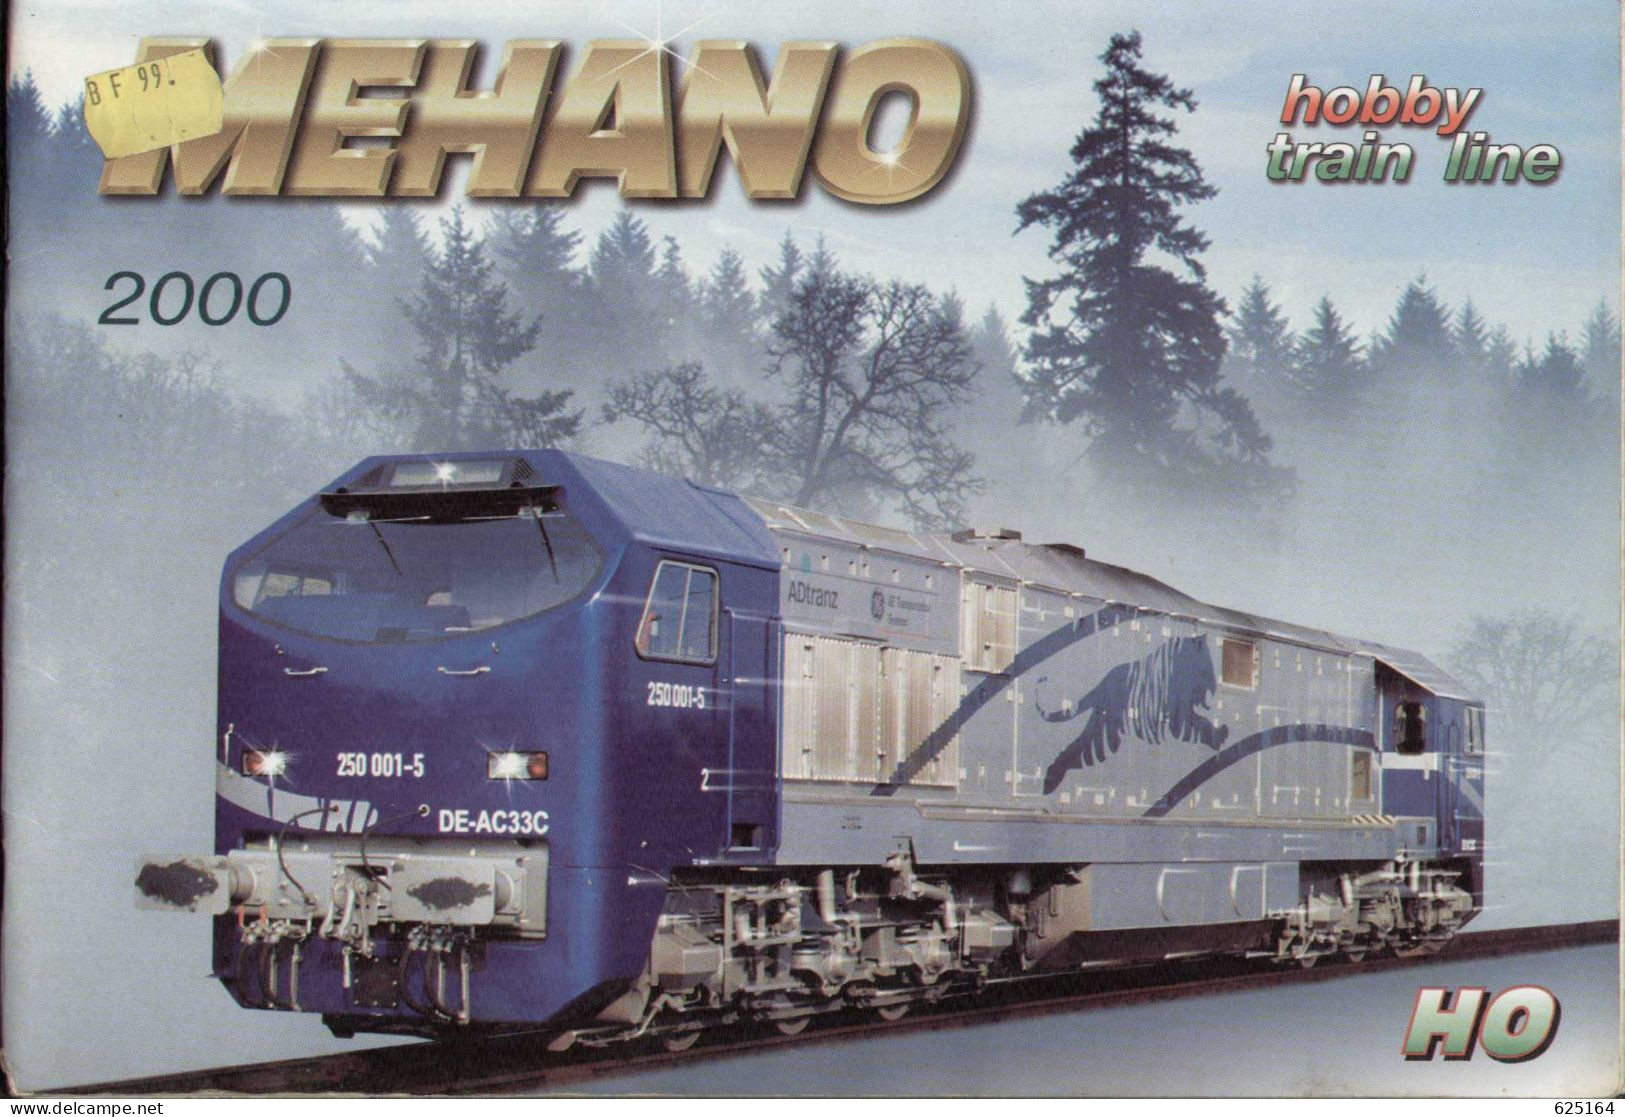 Catalogue MEHANO 2000 HO 1/87 -  Hobby - Train Line - En Slovène, Anglais, Allemand, Italien Et Français - French